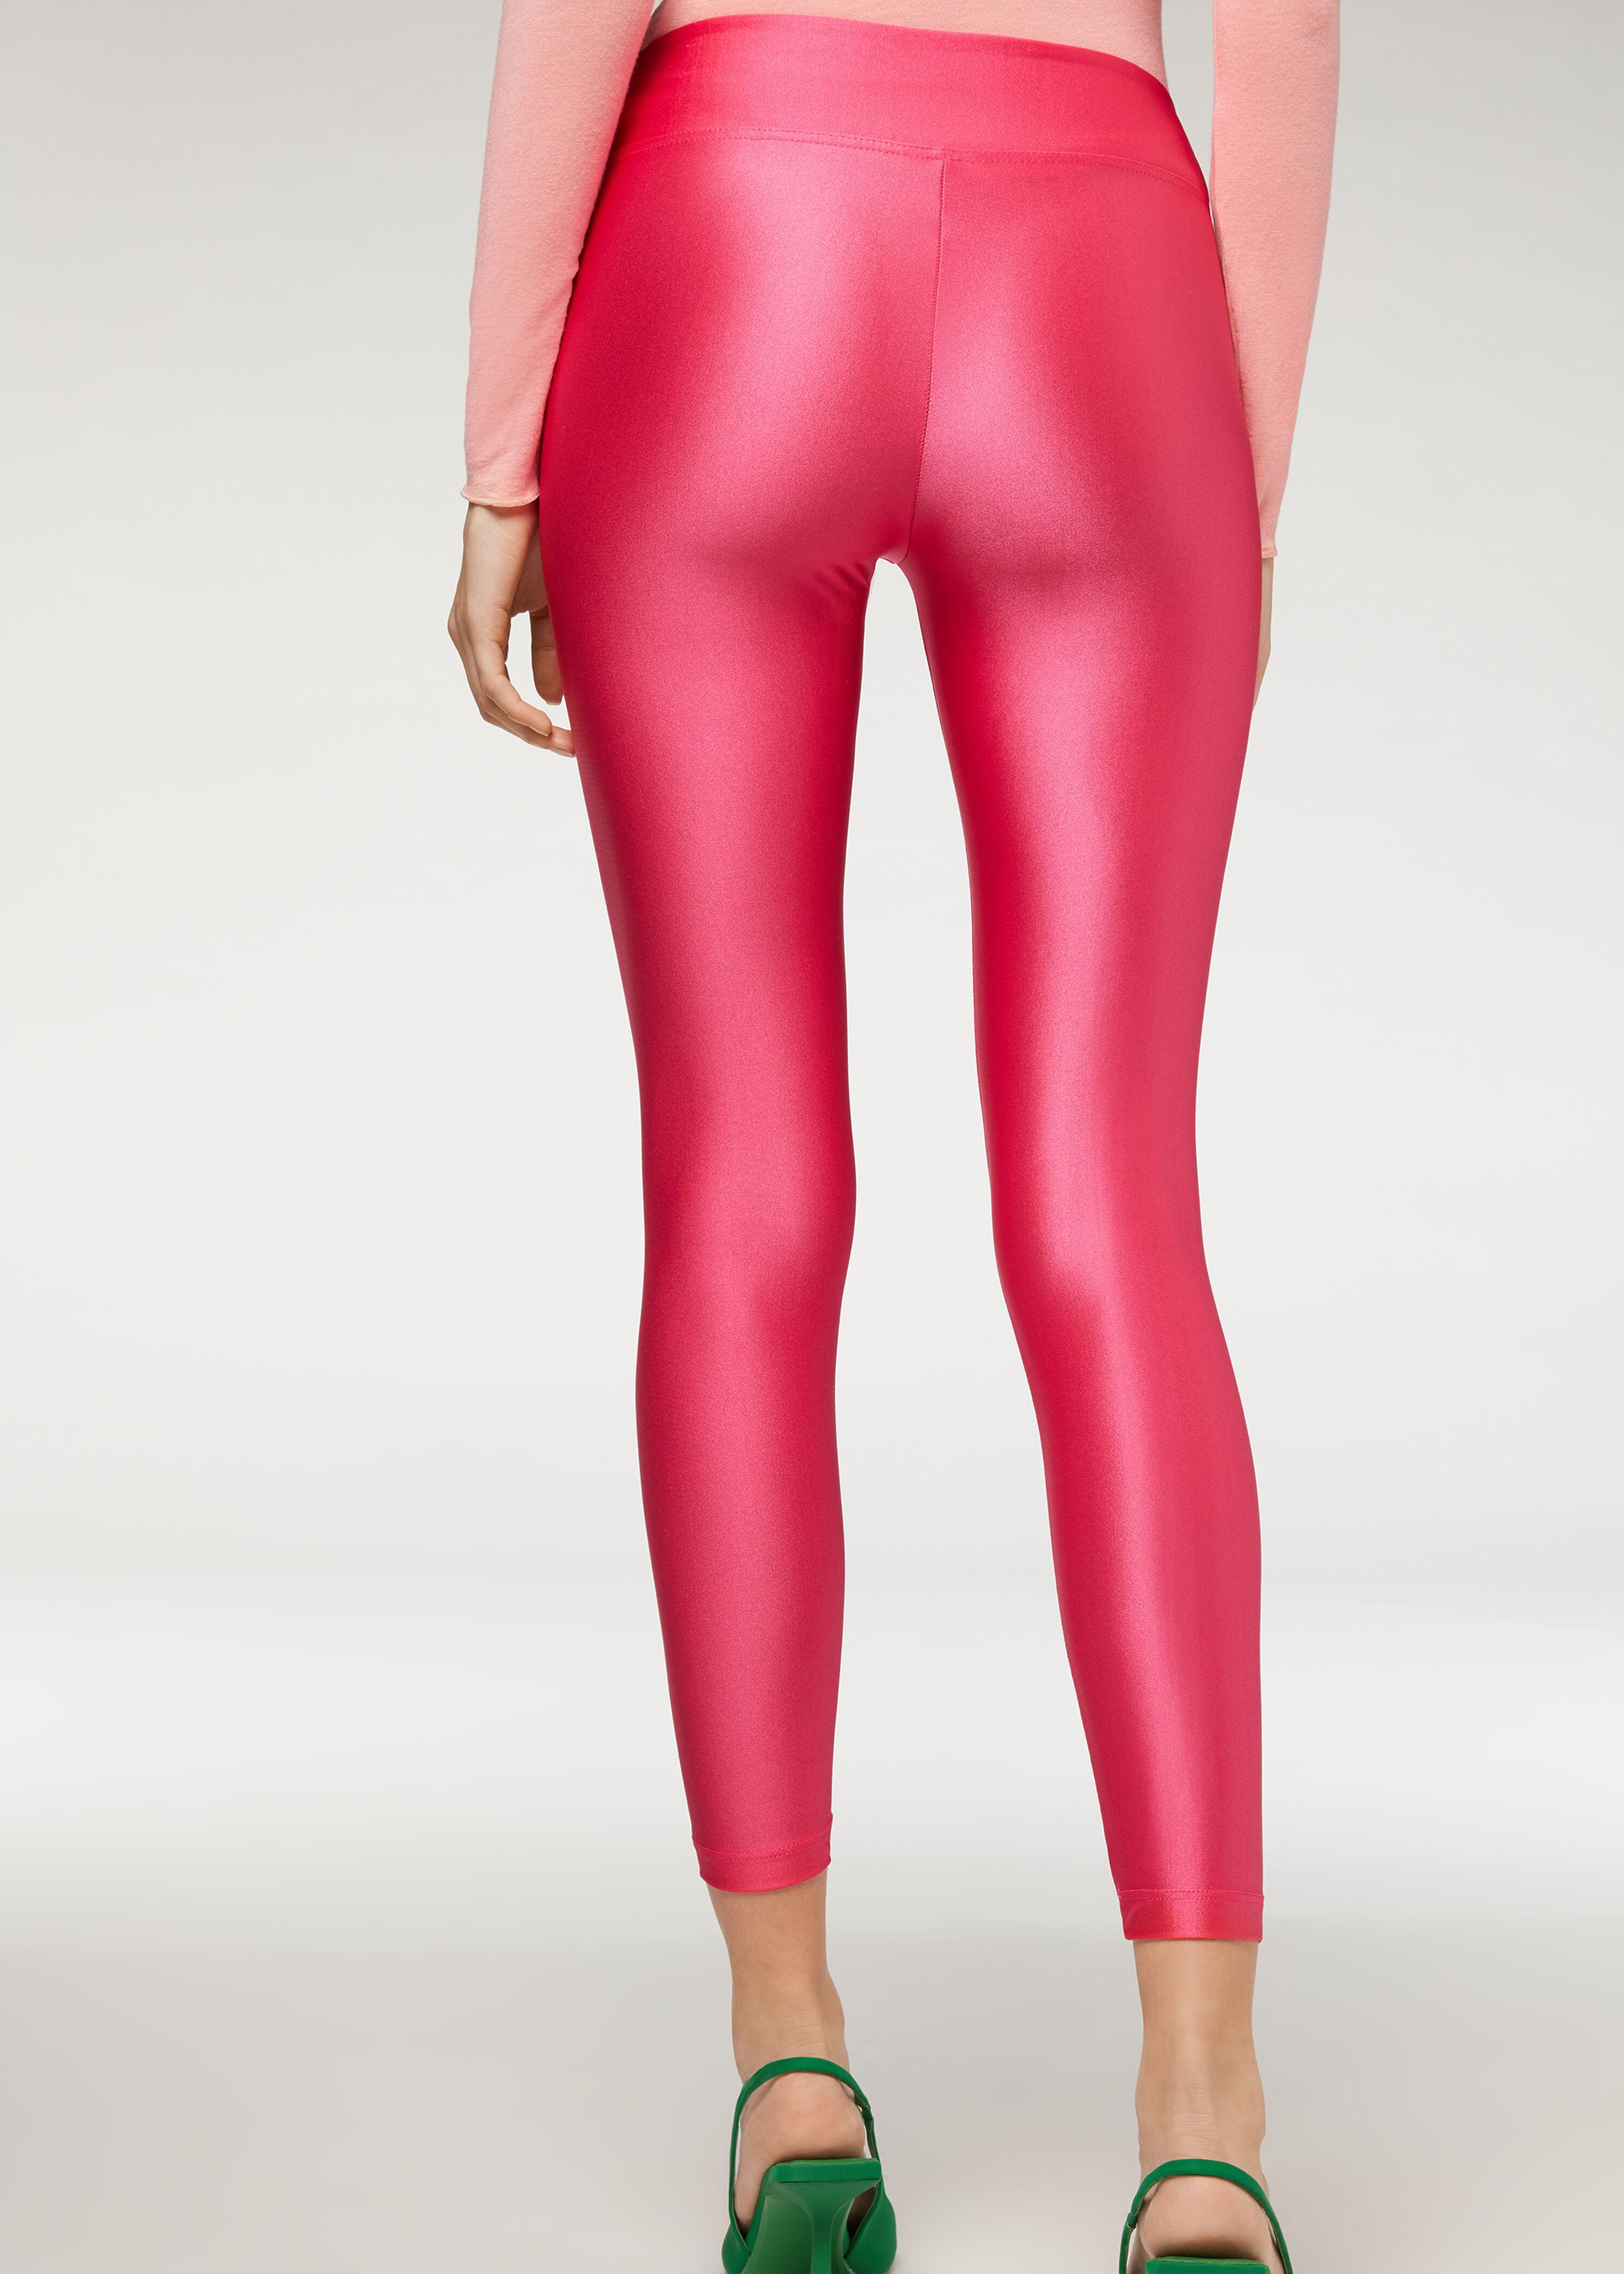 Calzedonia Super Shiny Leggings in Pink | Lyst UK